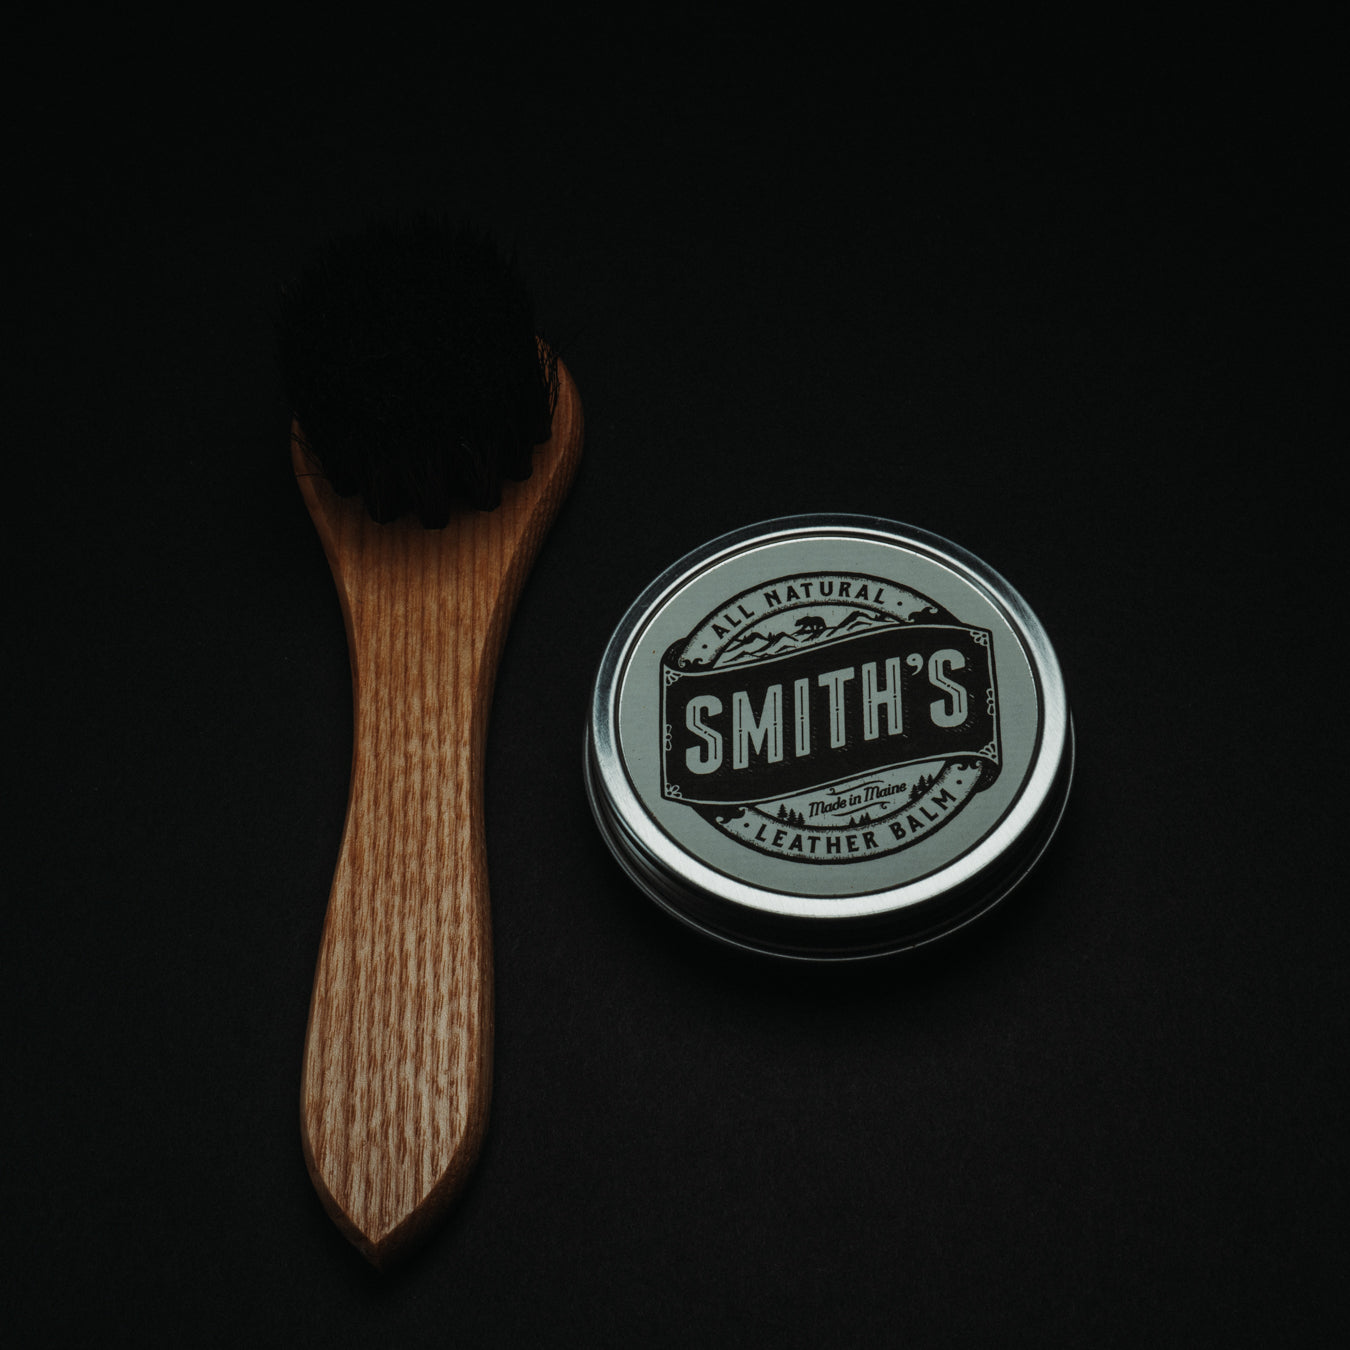 Smith's Leather Balm Bundle